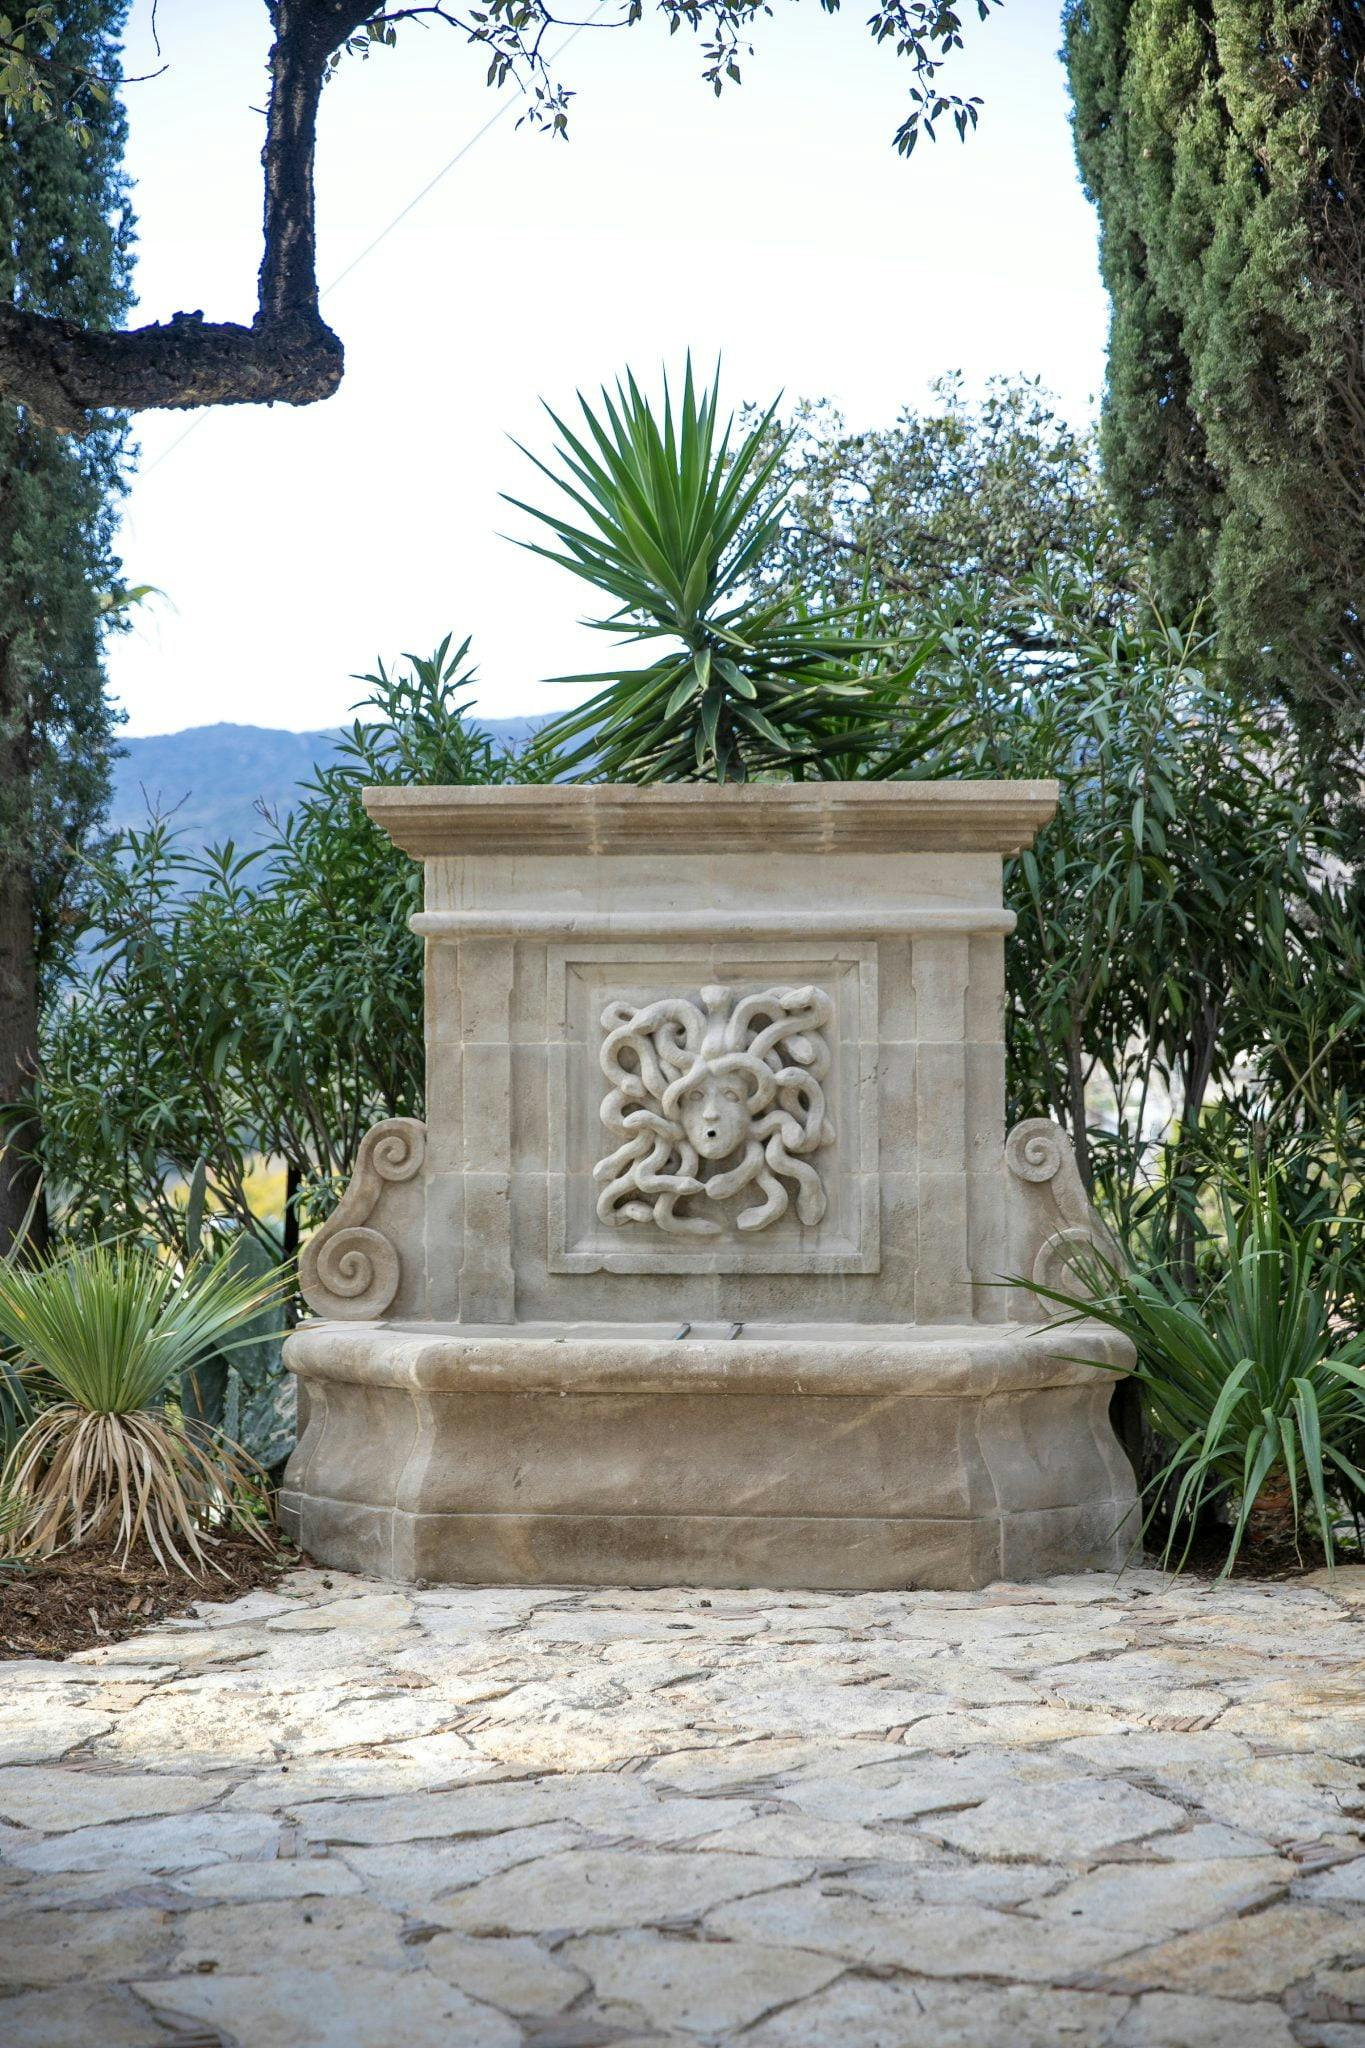 Original stone fountain in the garden with octopus